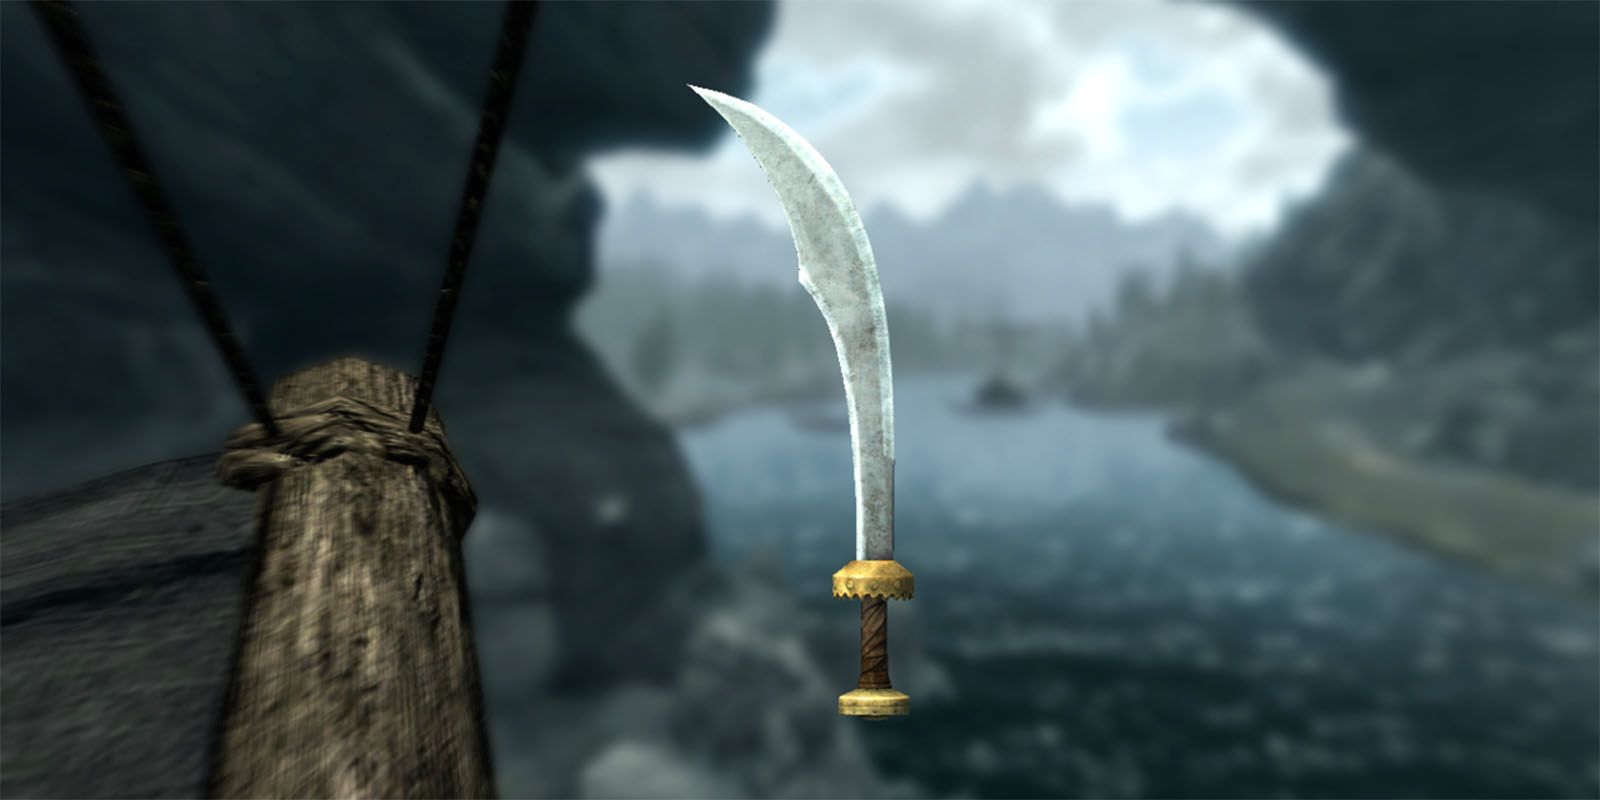 Skyrim image of Windshear sword from emperor's boat.